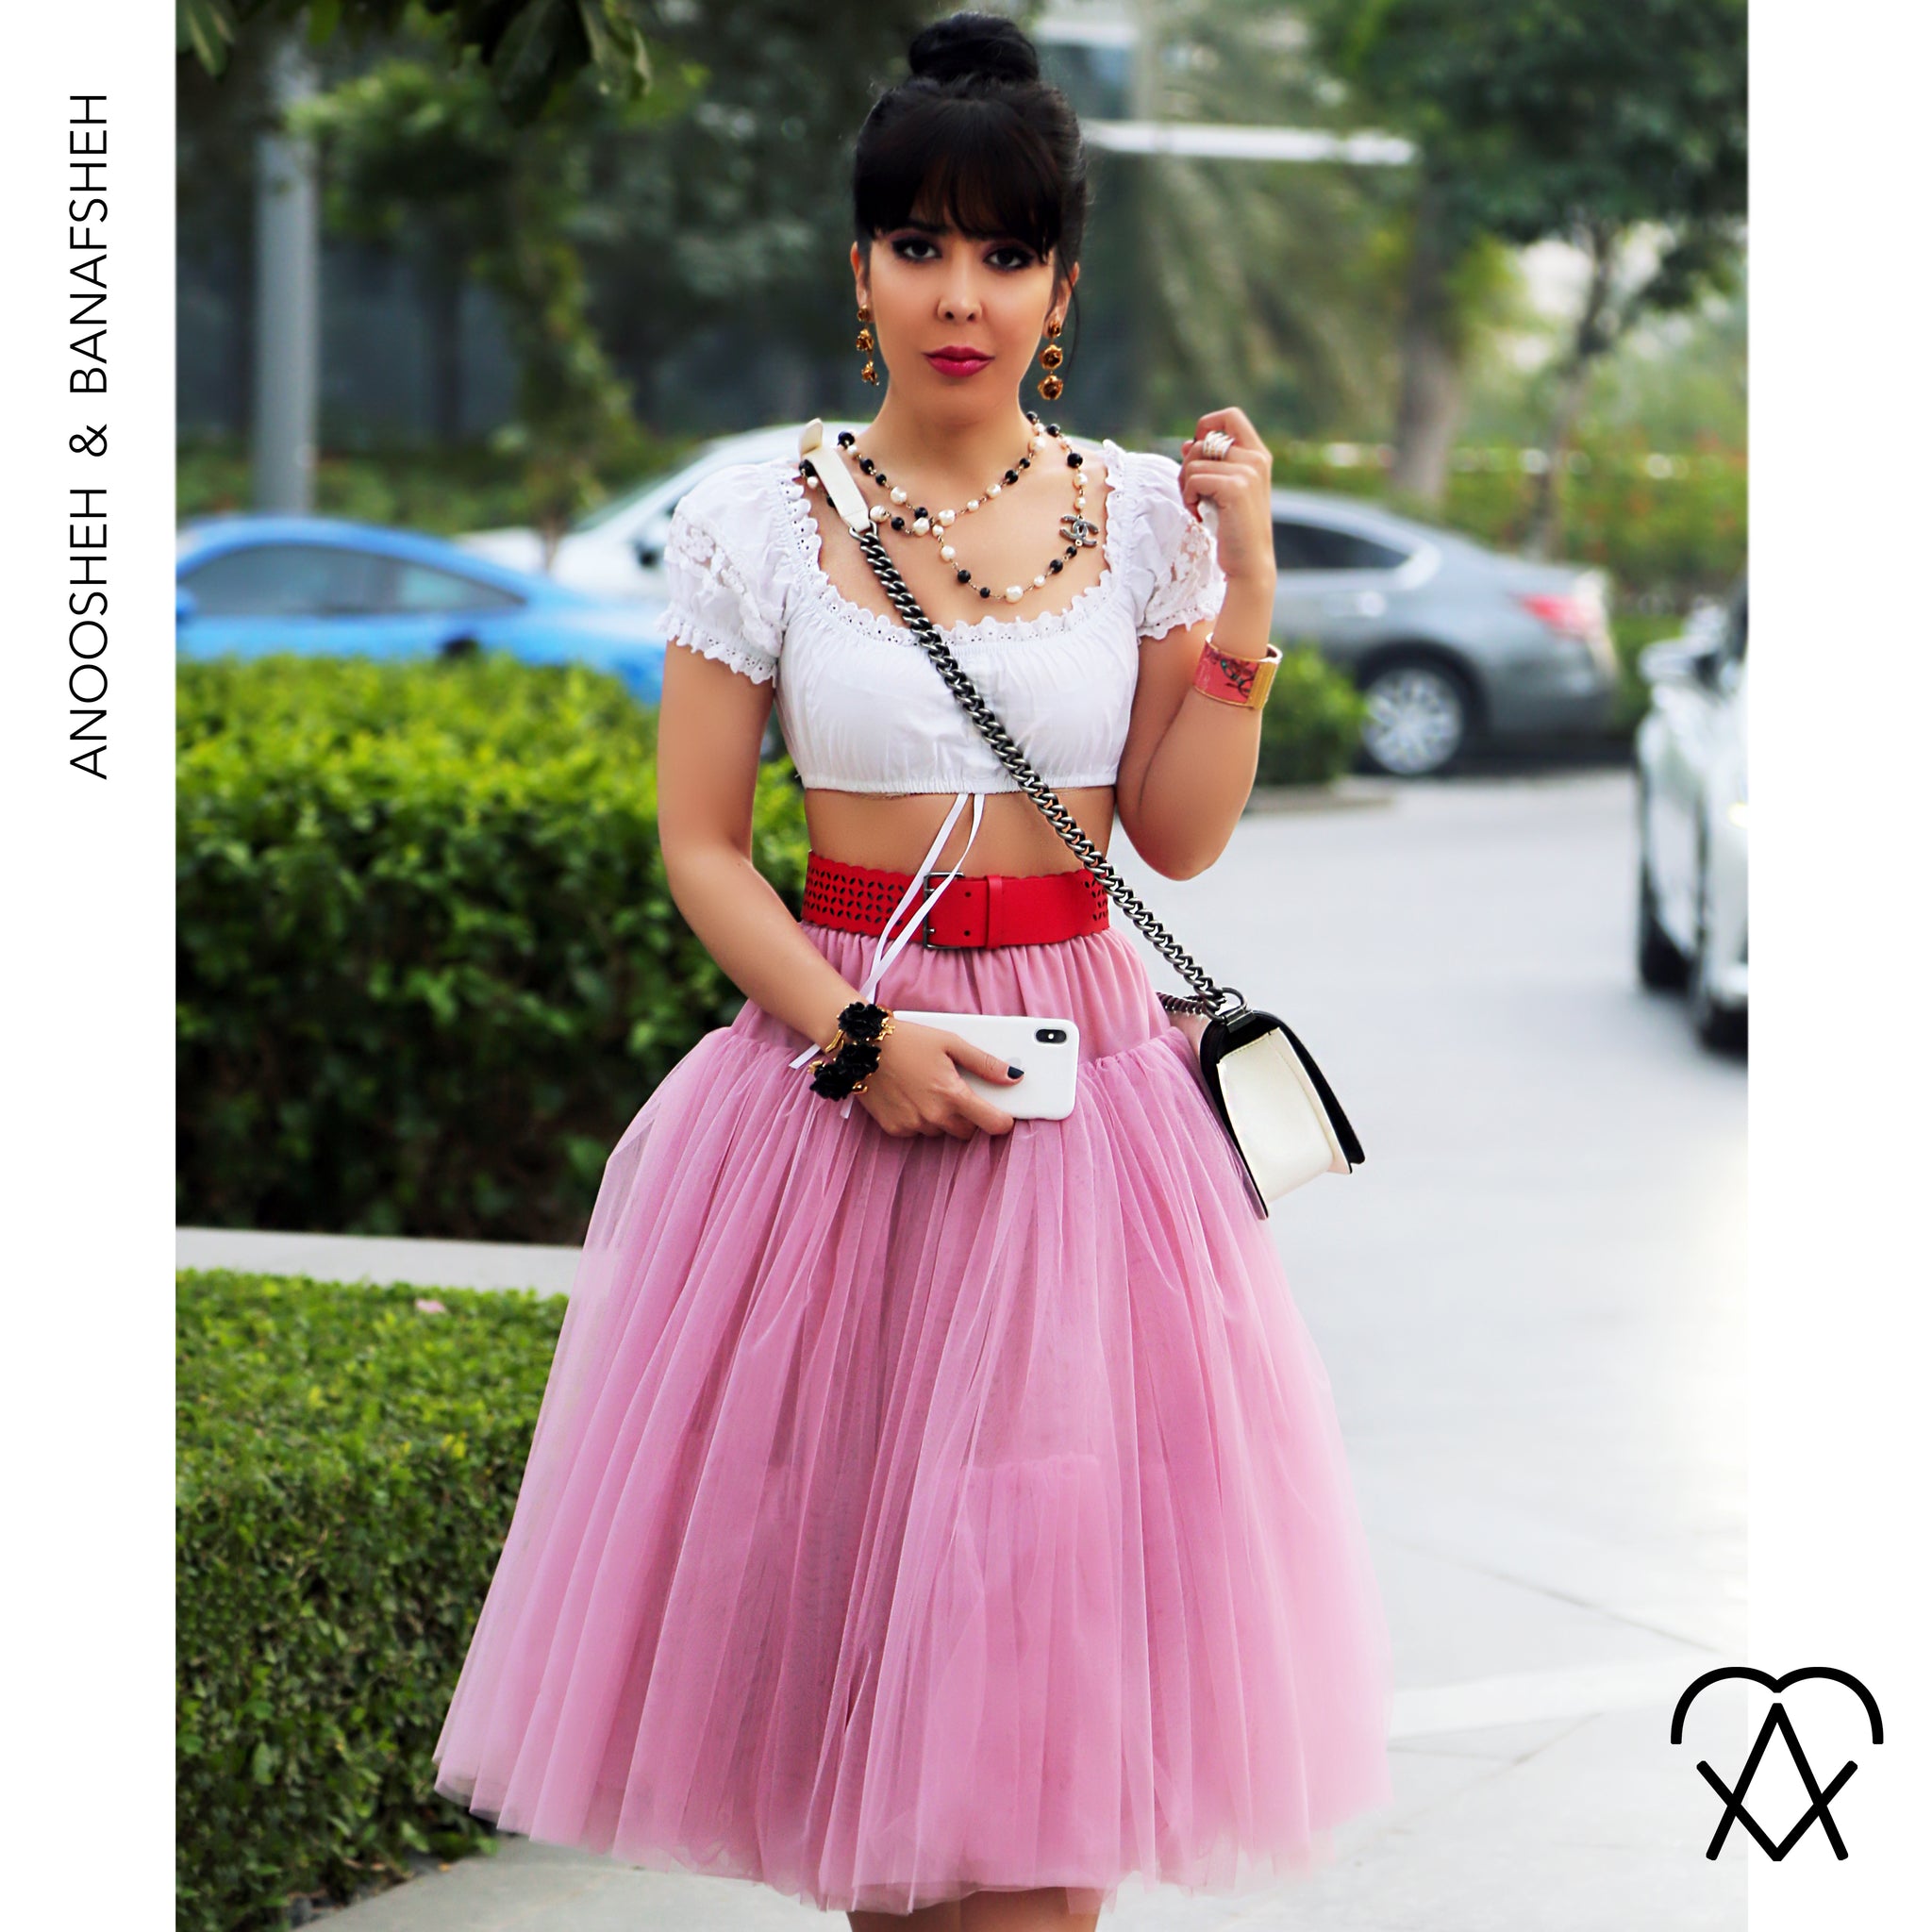 Anoosheh & Banafsheh article on chic loungewear and sleepwear wearing Dolce and Gabbana Pink Tulle Skirt